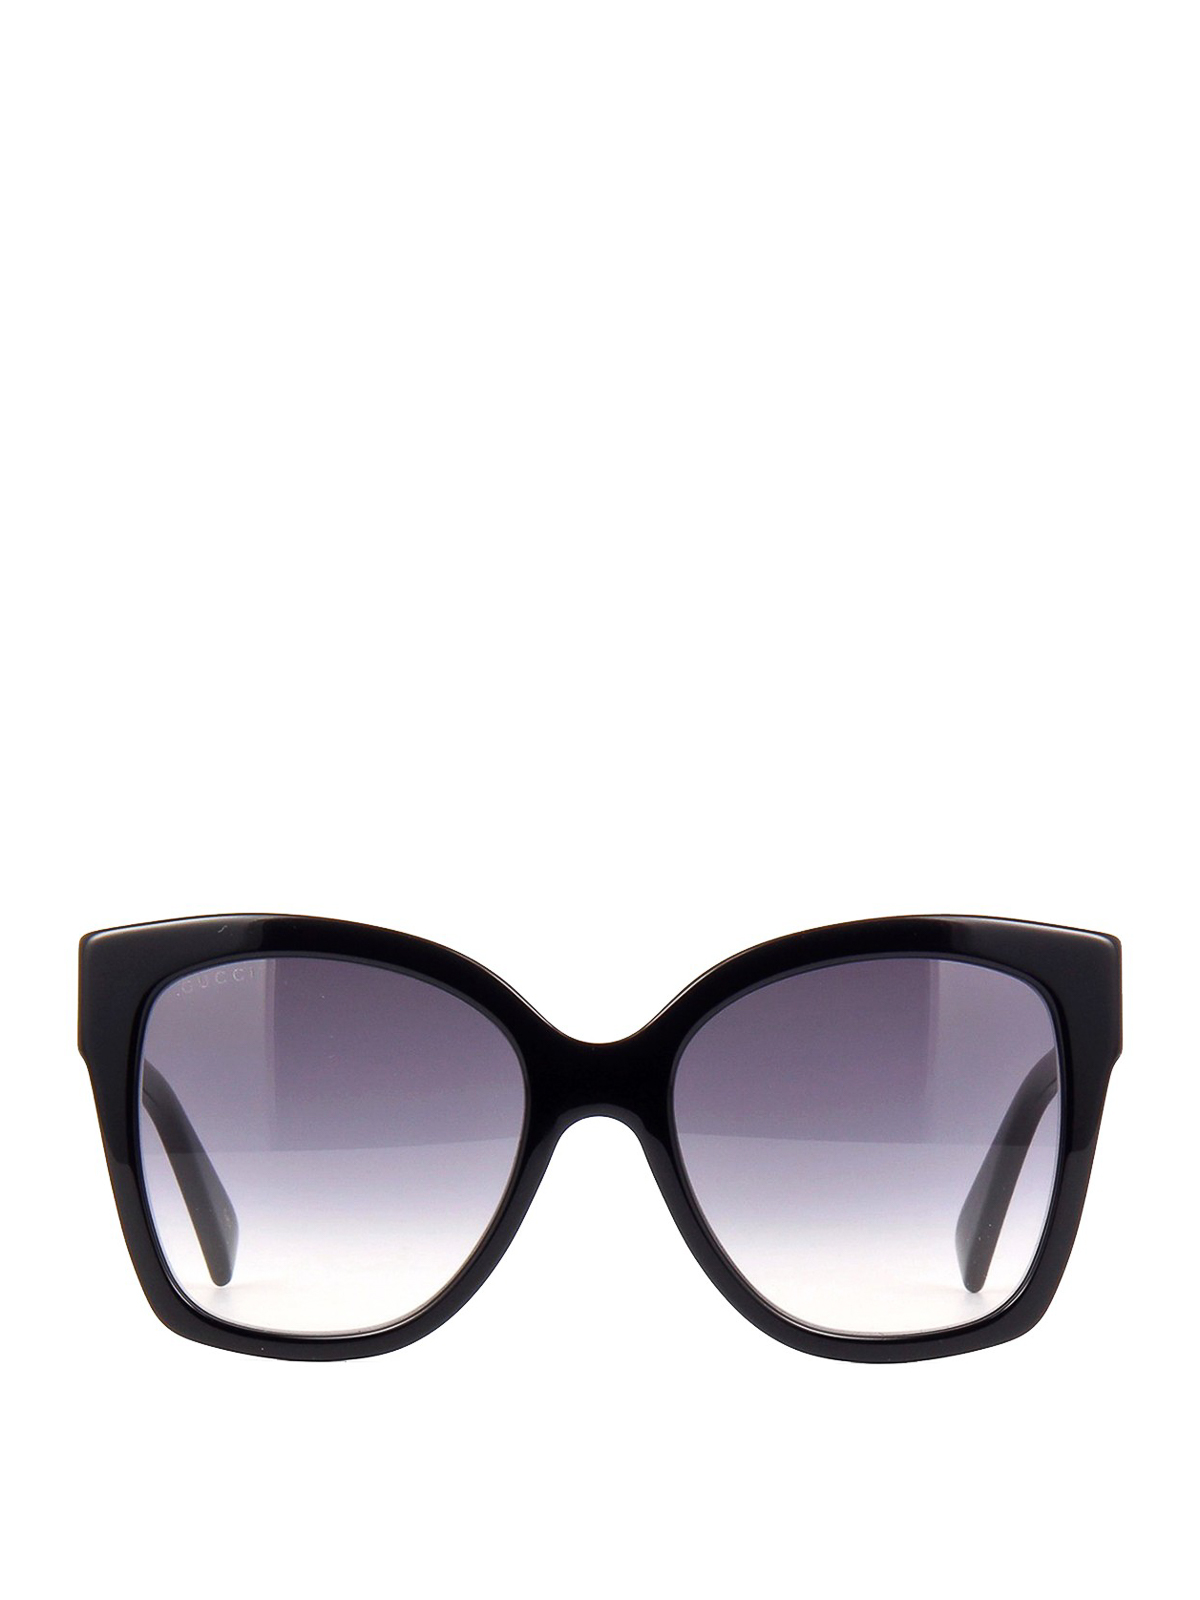 Sunglasses Gucci - Tricolour hinge polished black sunglasses - GG0459S001